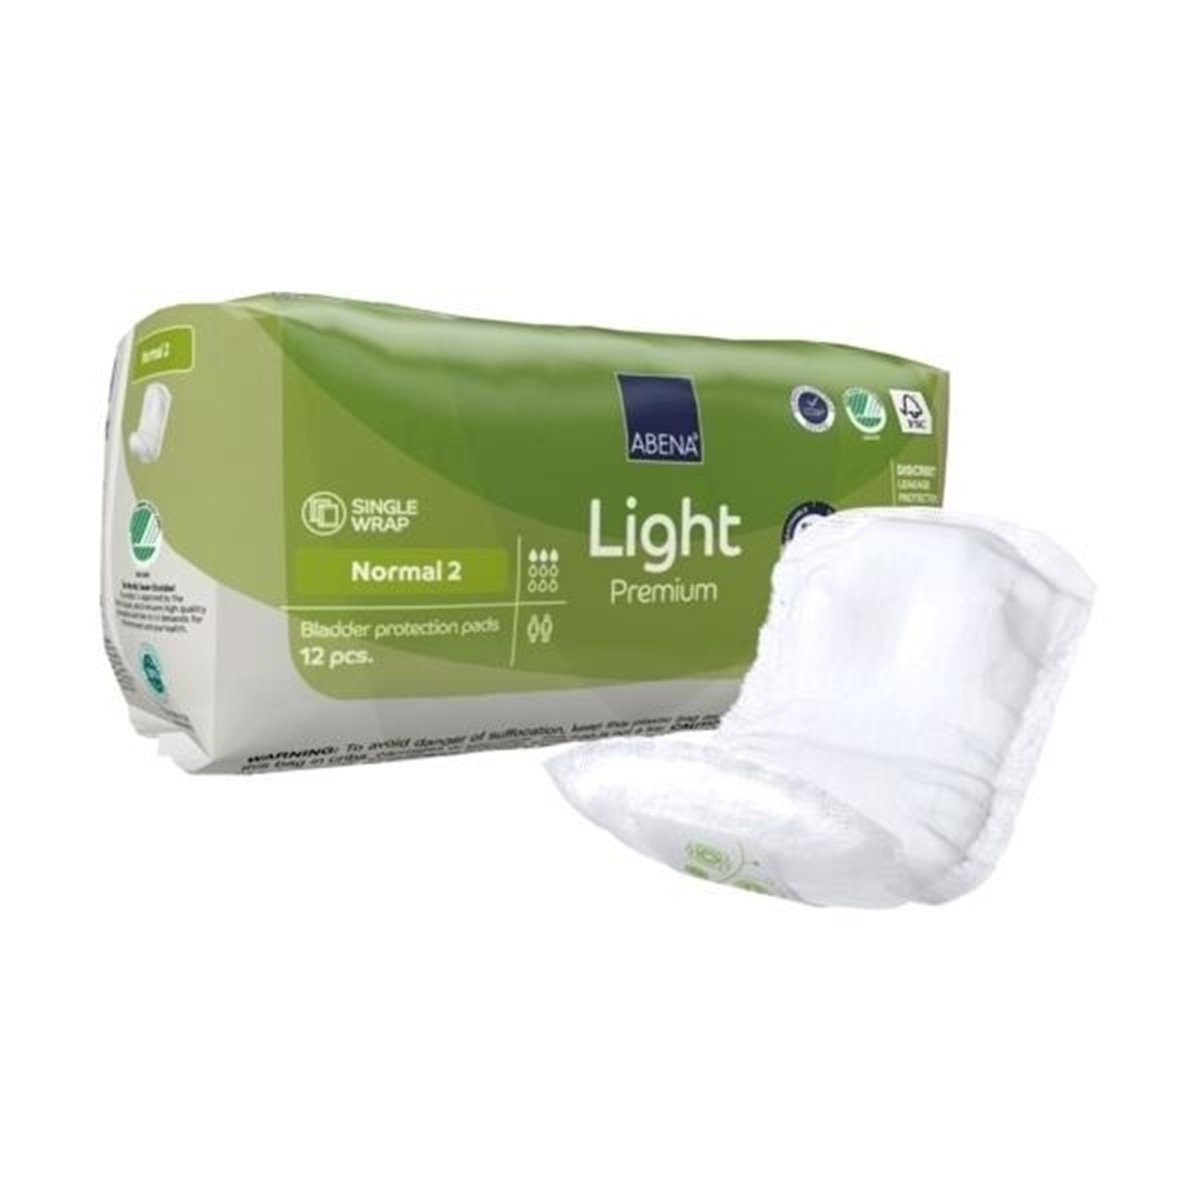 Abena Light Premium Bladder Protection Pads - 1218257_CS - 2